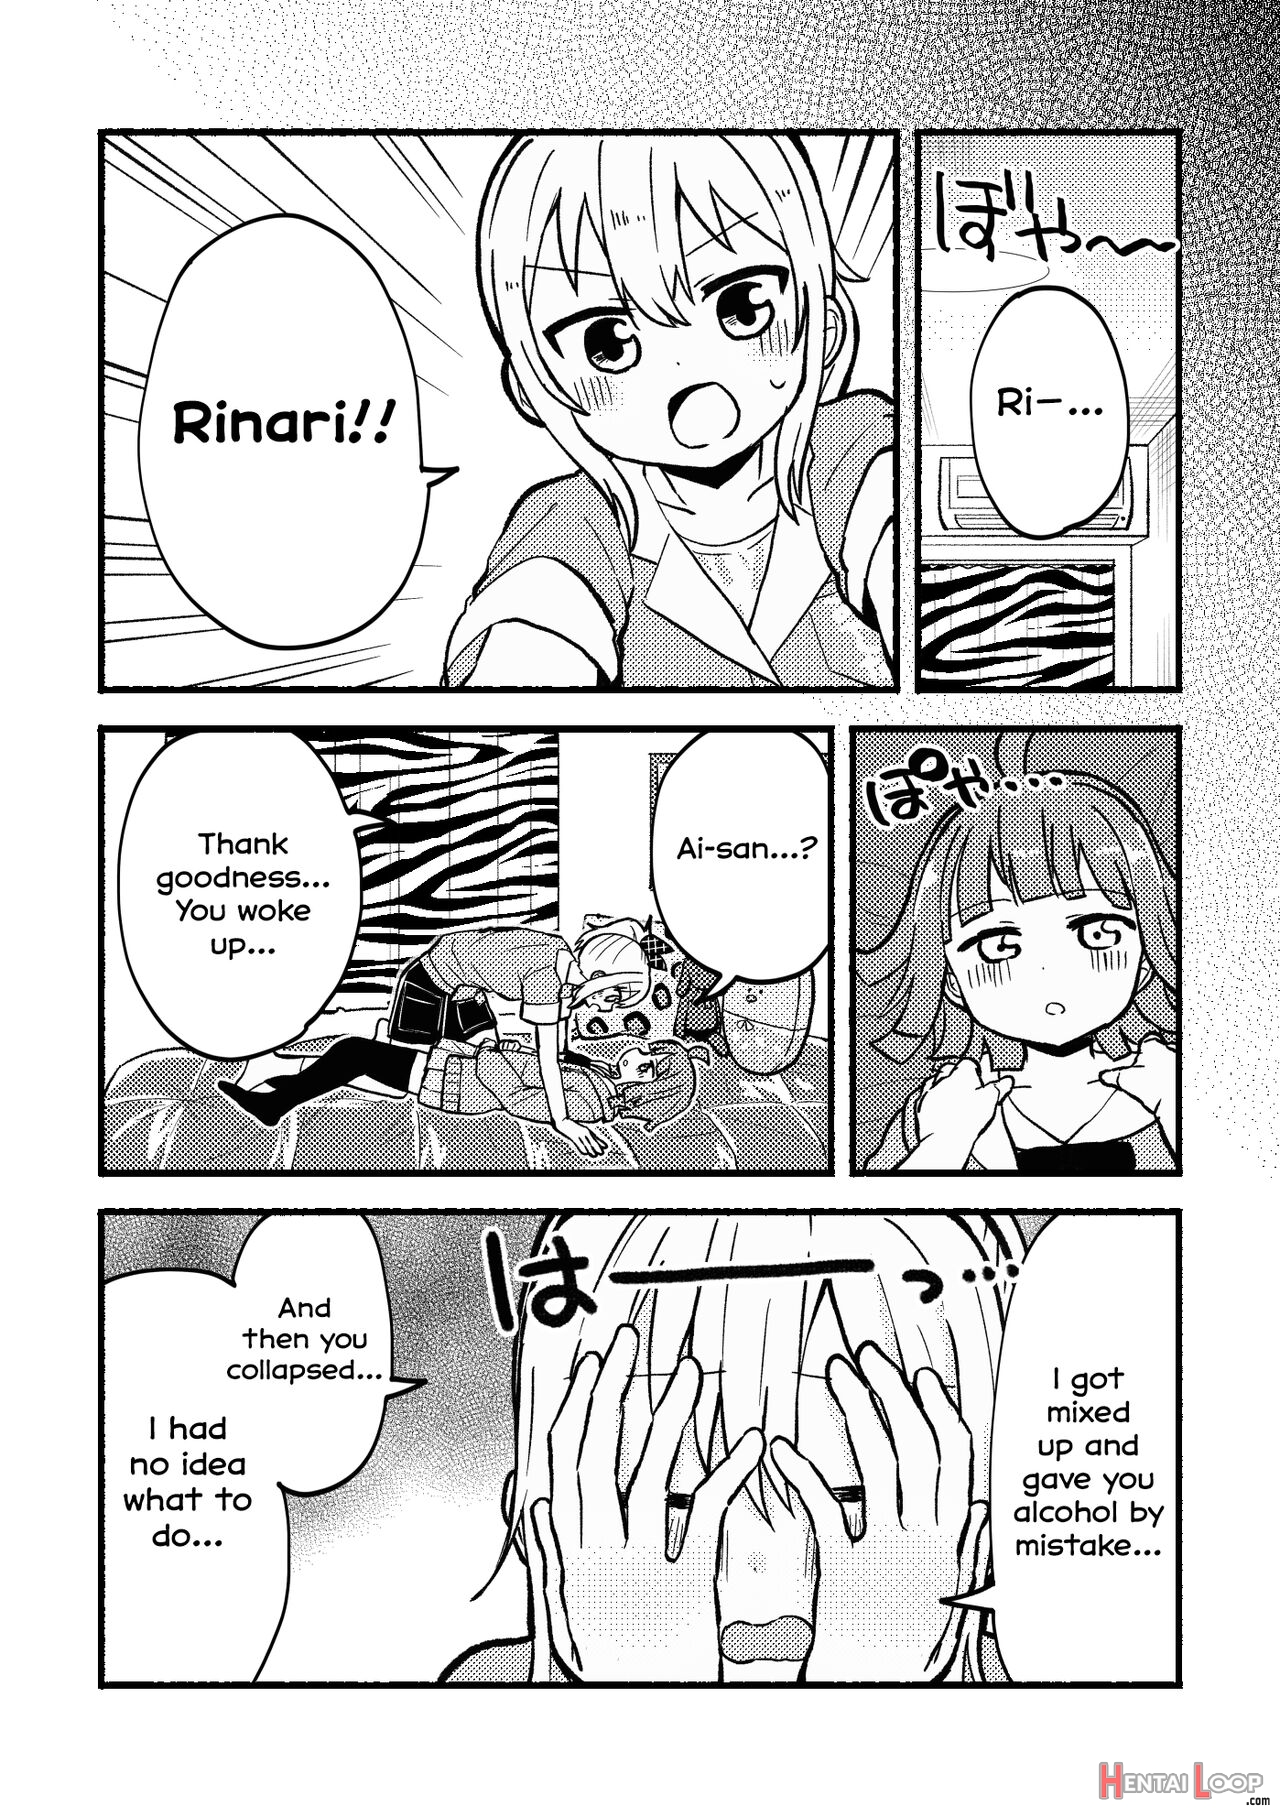 It's All Ai-san's Fault! page 8